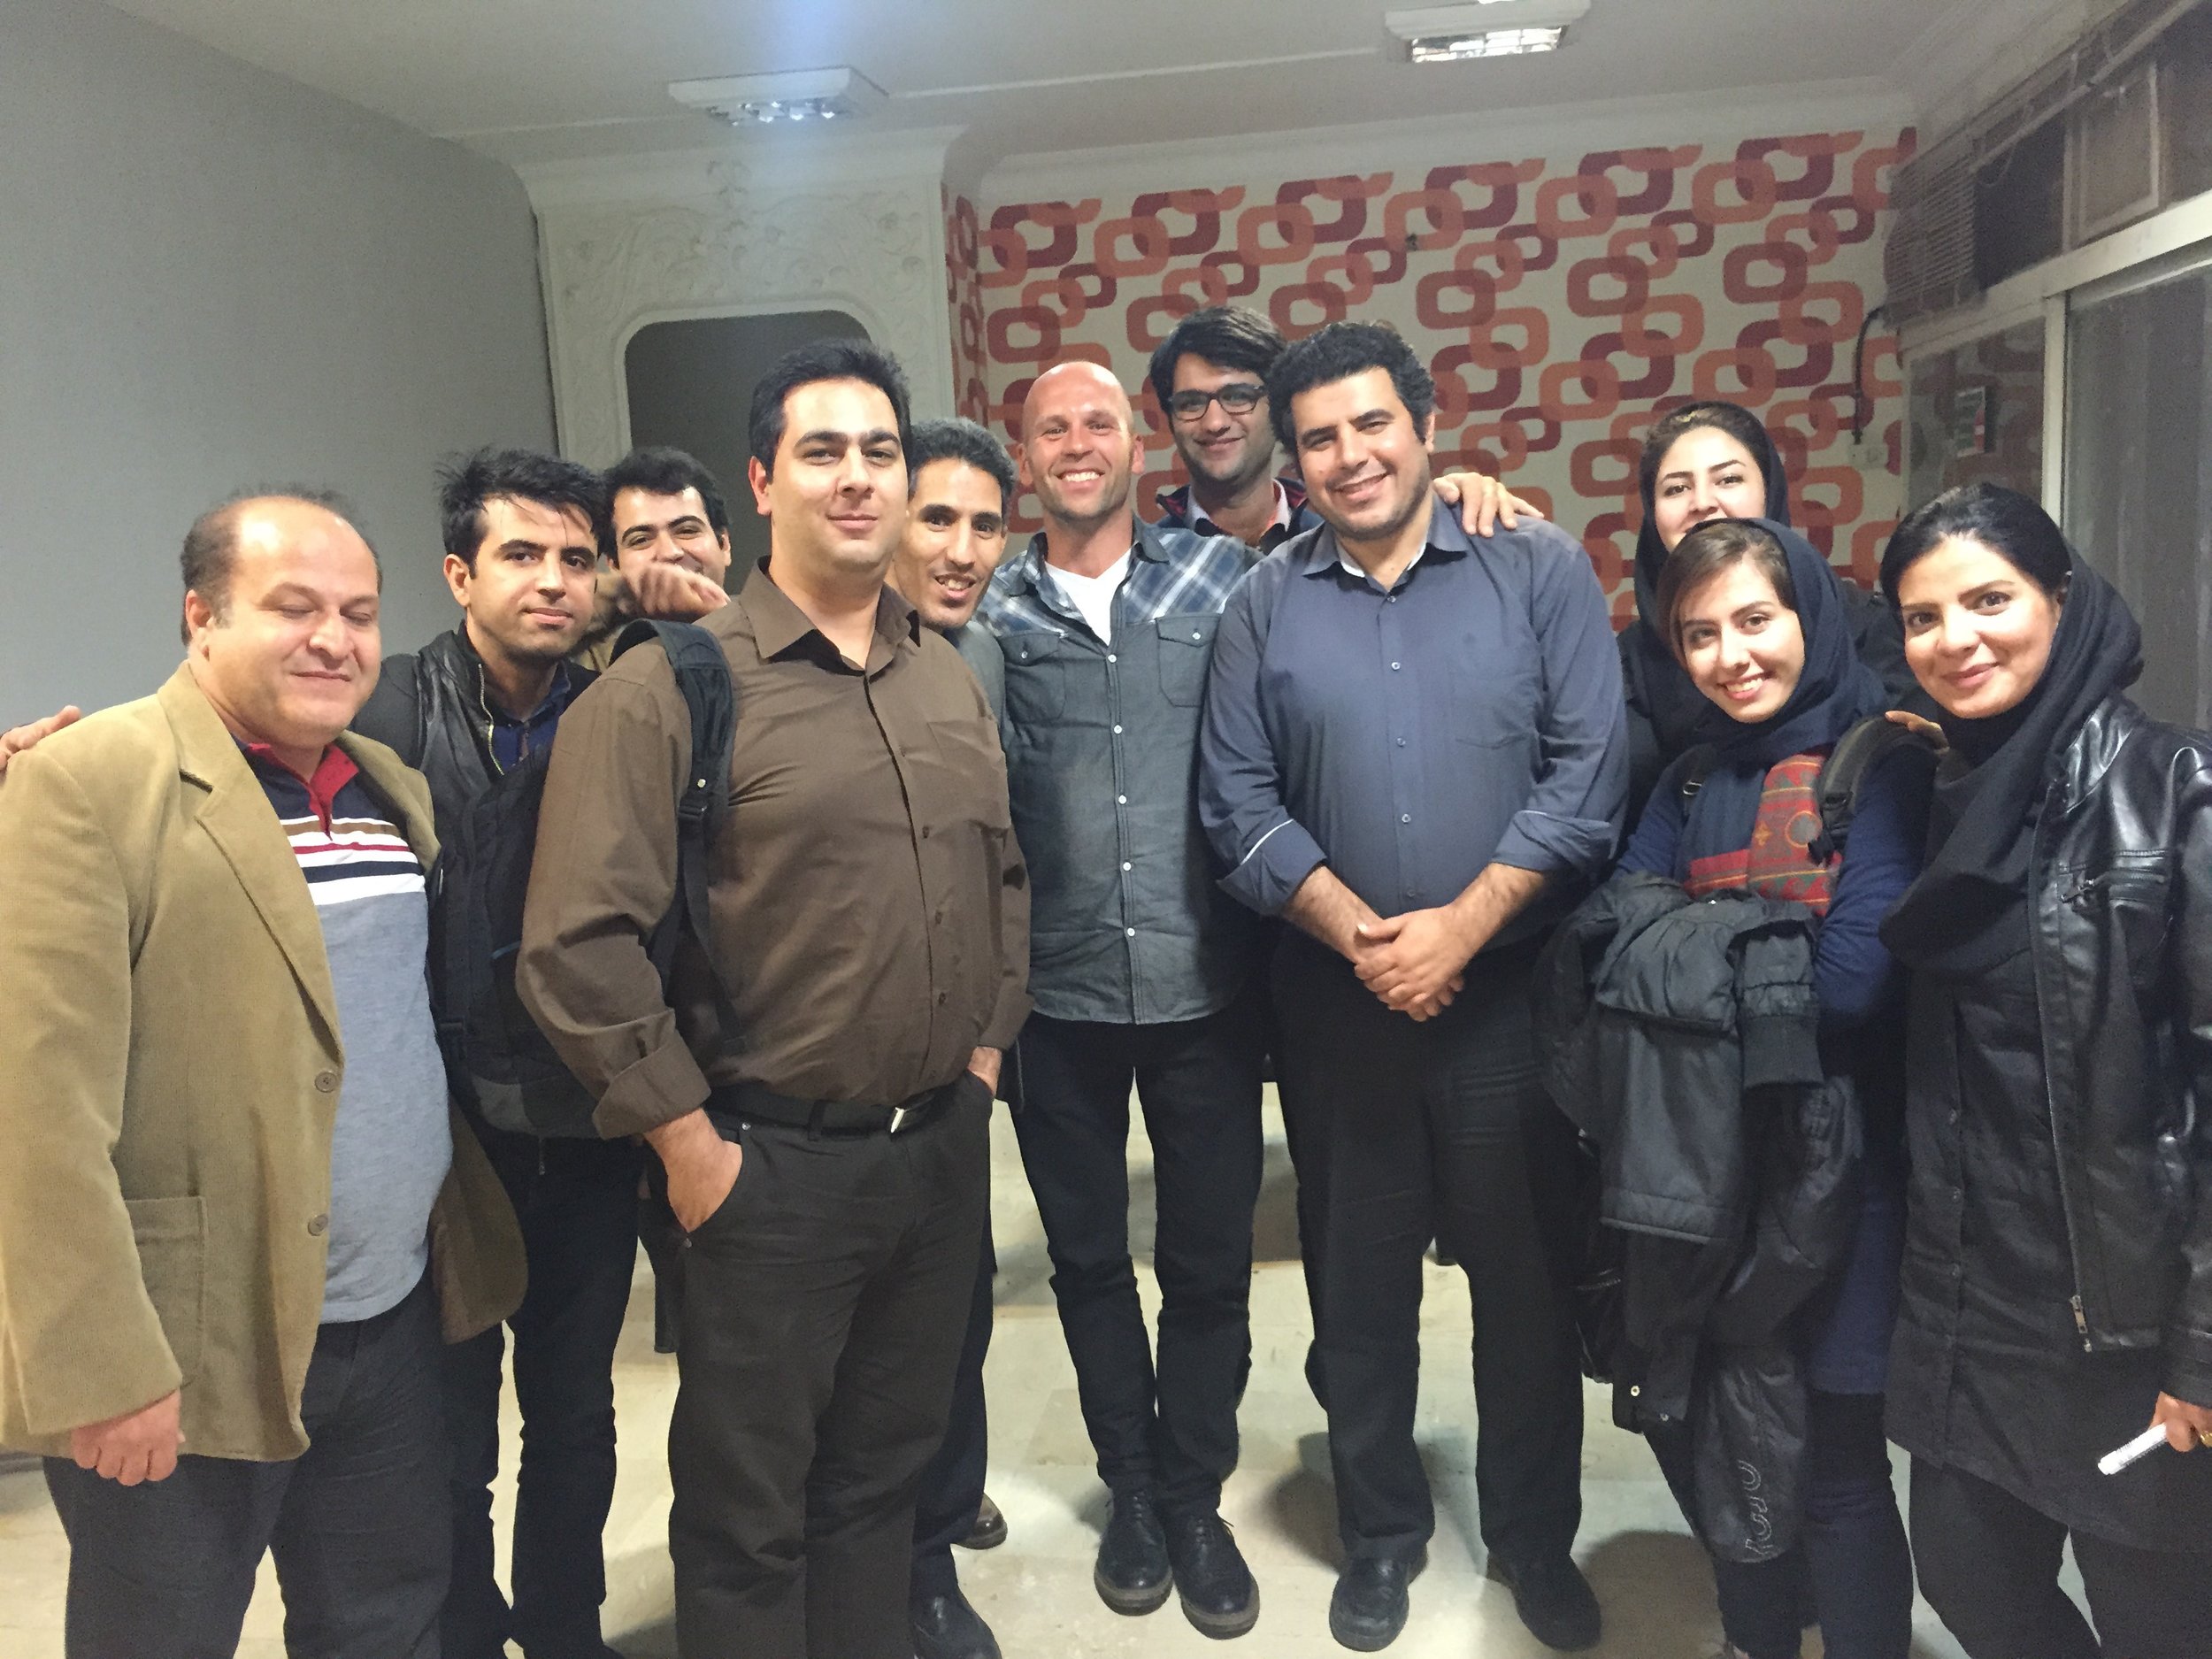 Cool group of Iranians I met in Tehran